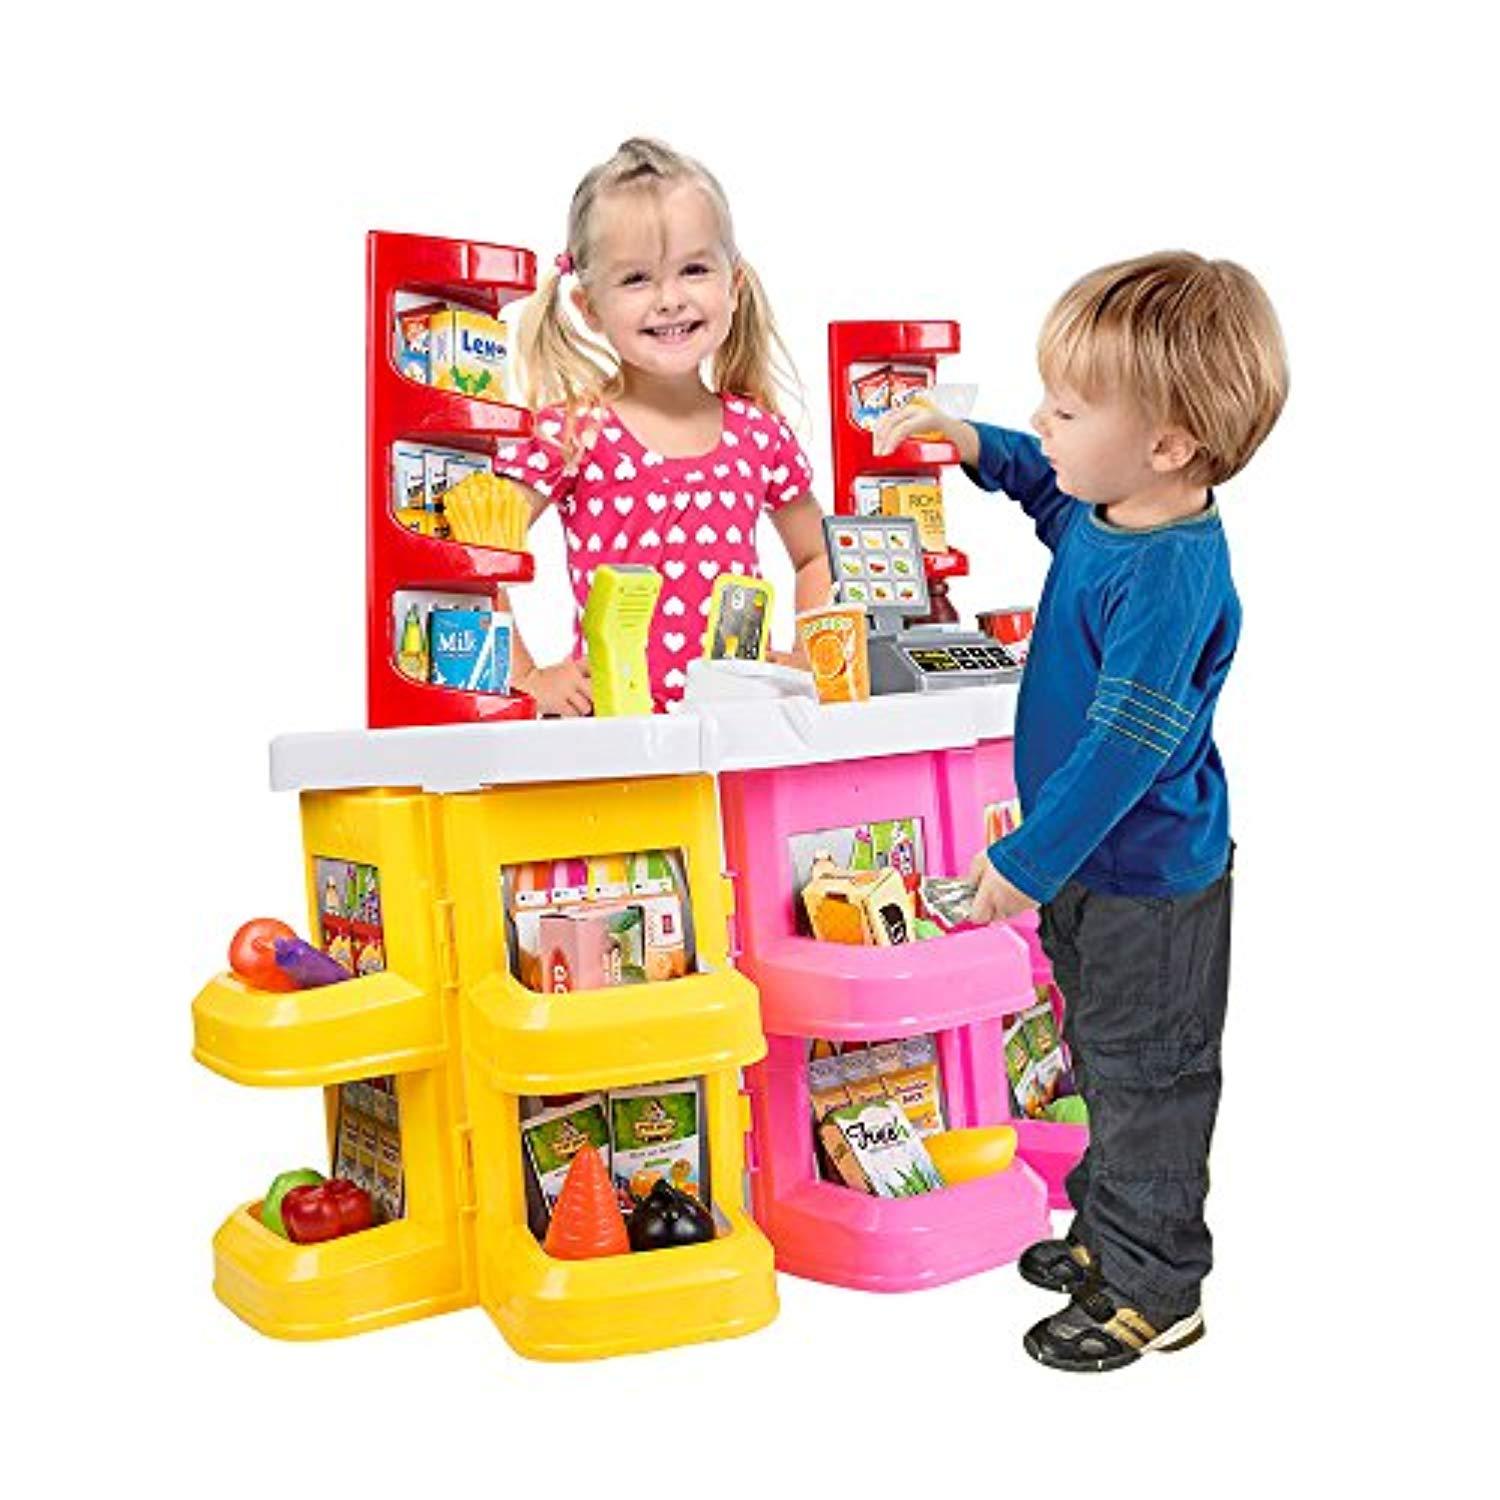 Bosonshop Kids Grocery Supermarket Shop Stand and Cash Register Play Set Toy